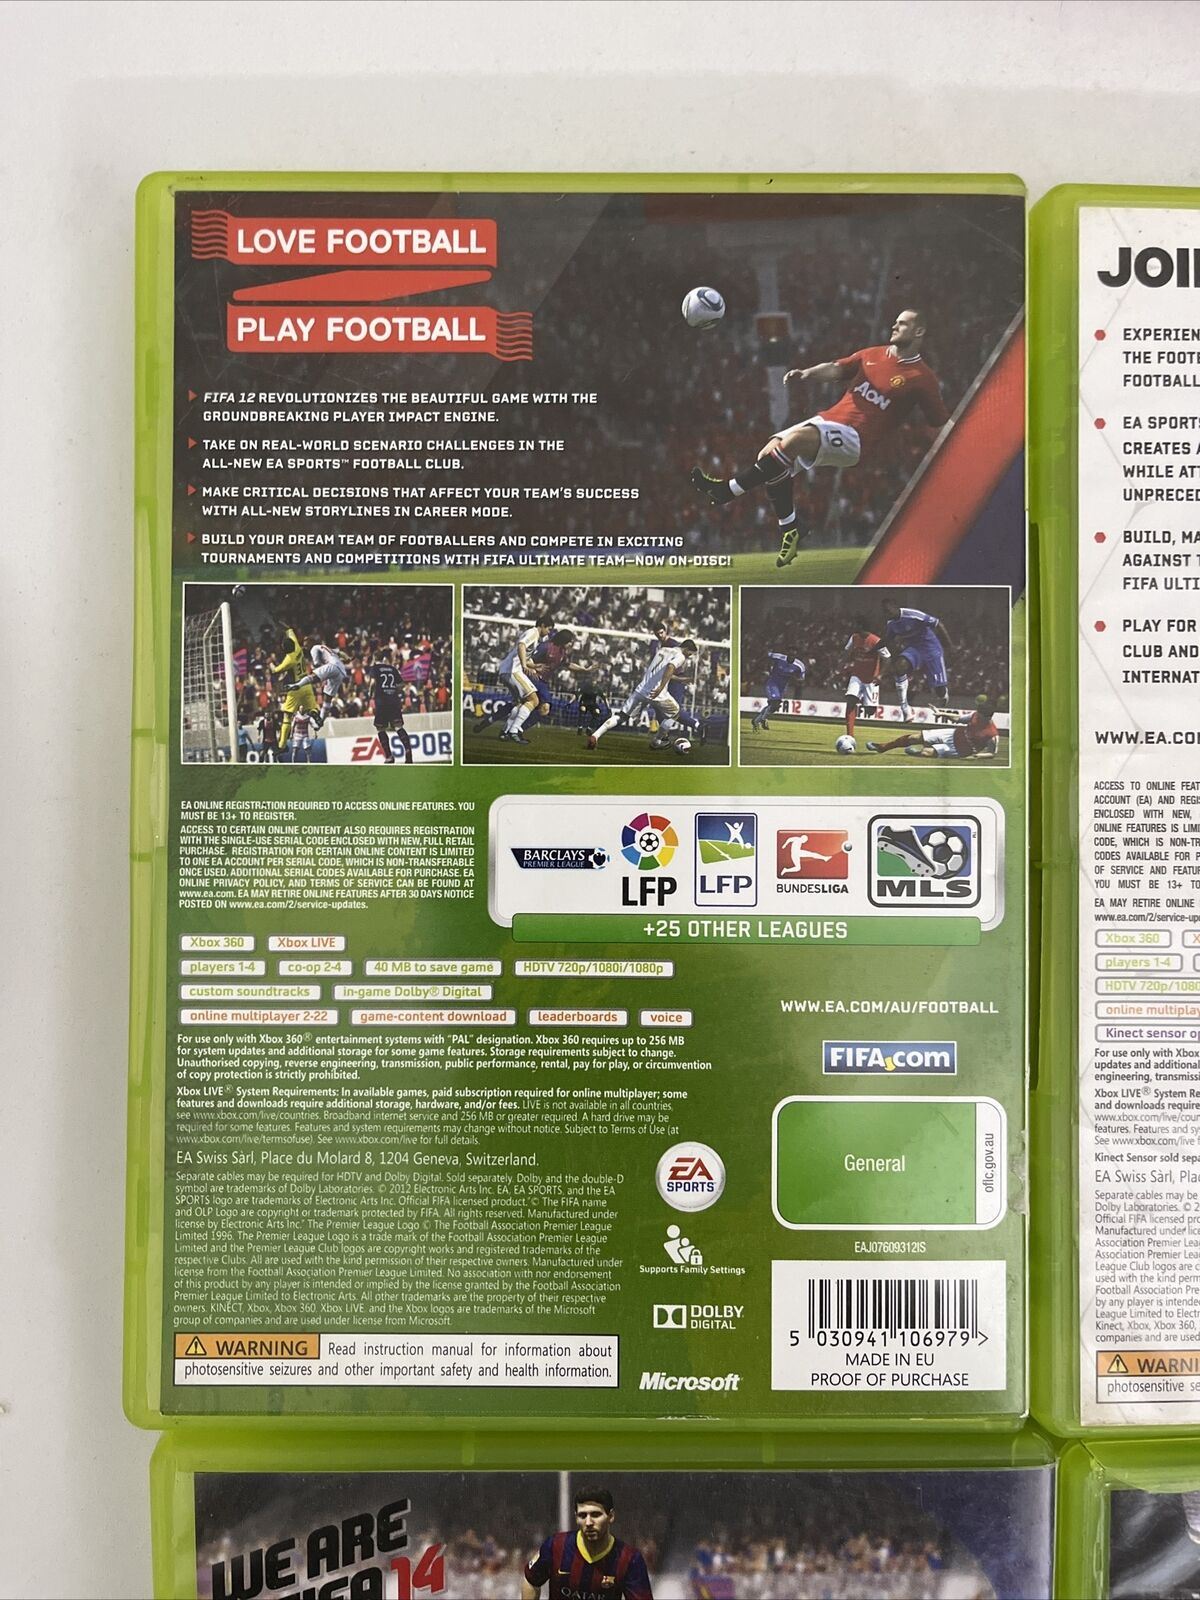 4x FIFA 12, 13, 14 ,18 Microsoft XBOX 360 PAL Football Soccer Games